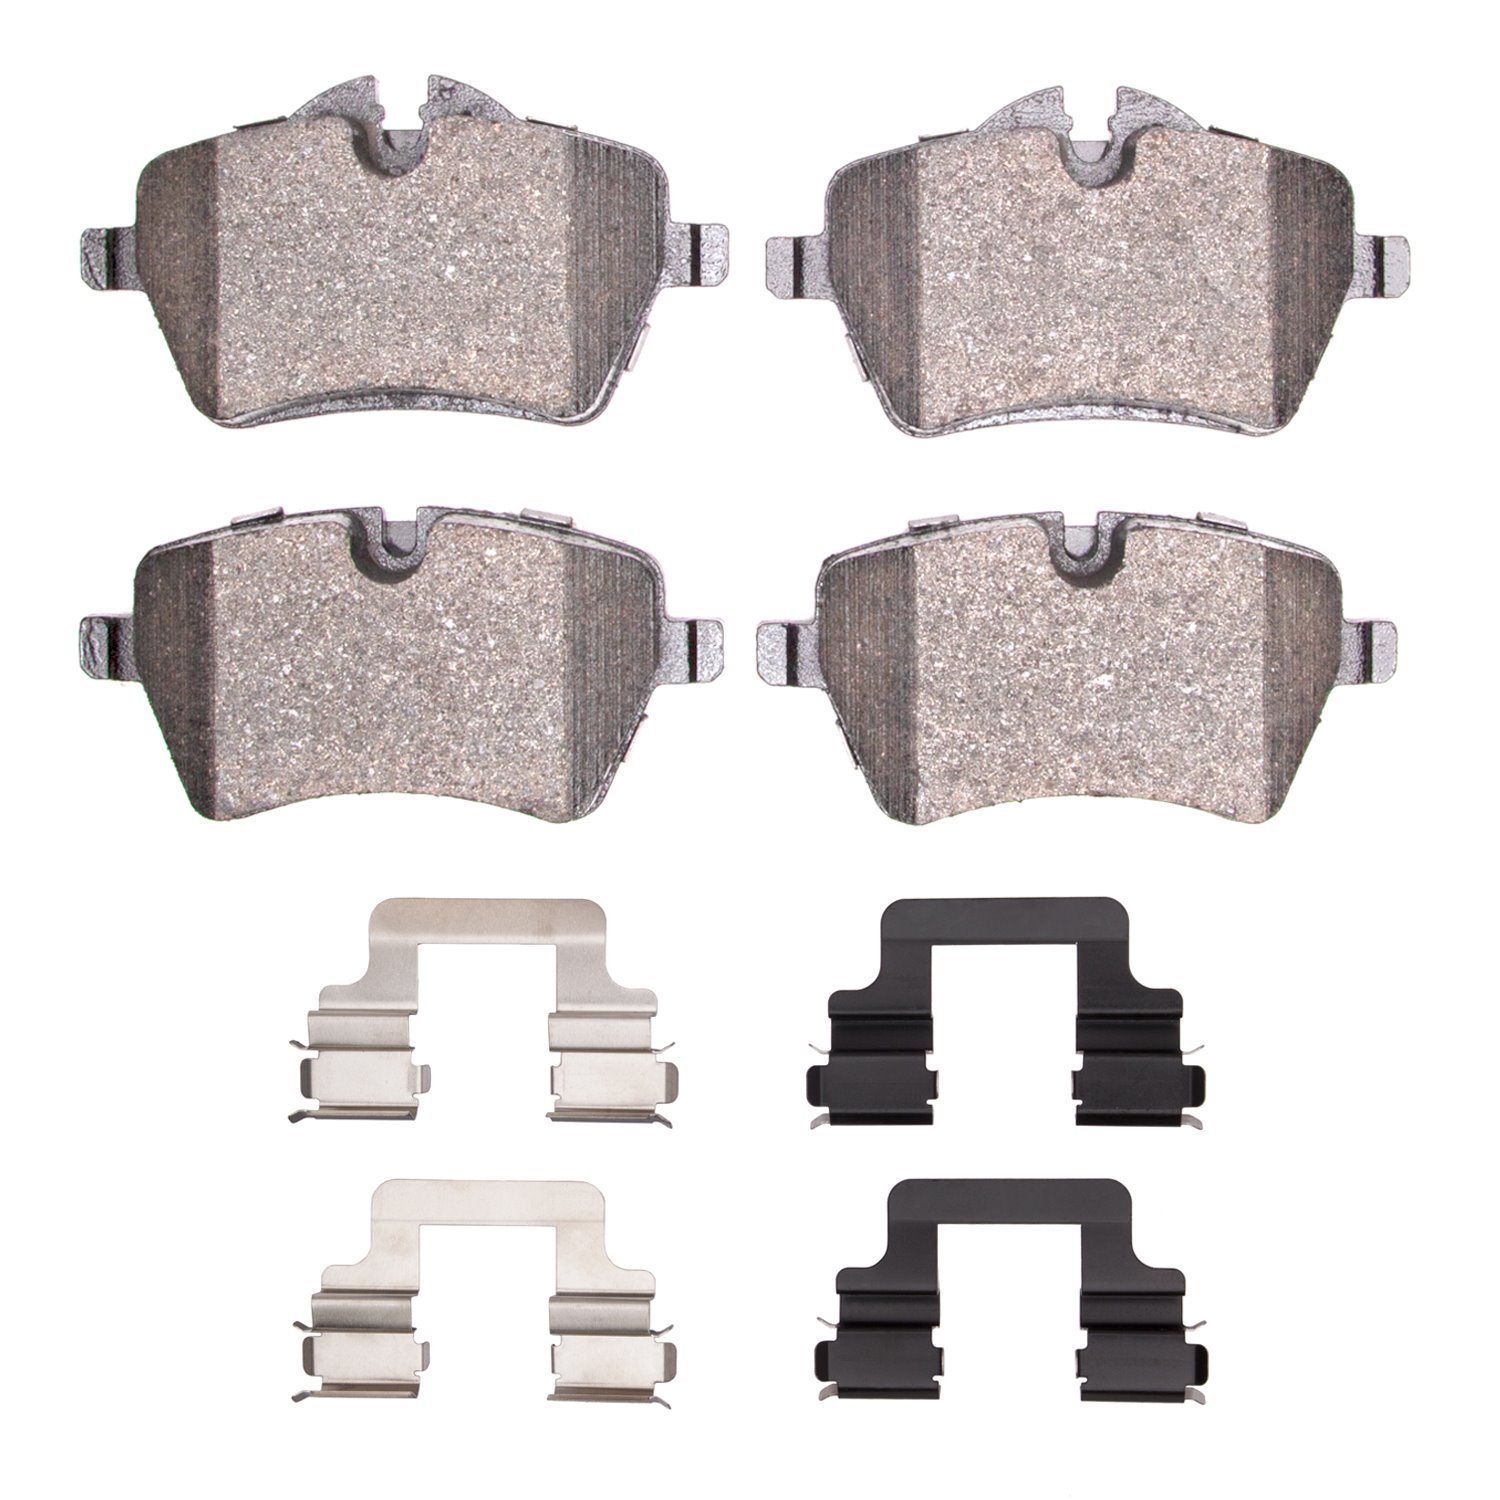 1310-1204-01 3000-Series Ceramic Brake Pads & Hardware Kit, 2002-2016 Mini, Position: Front